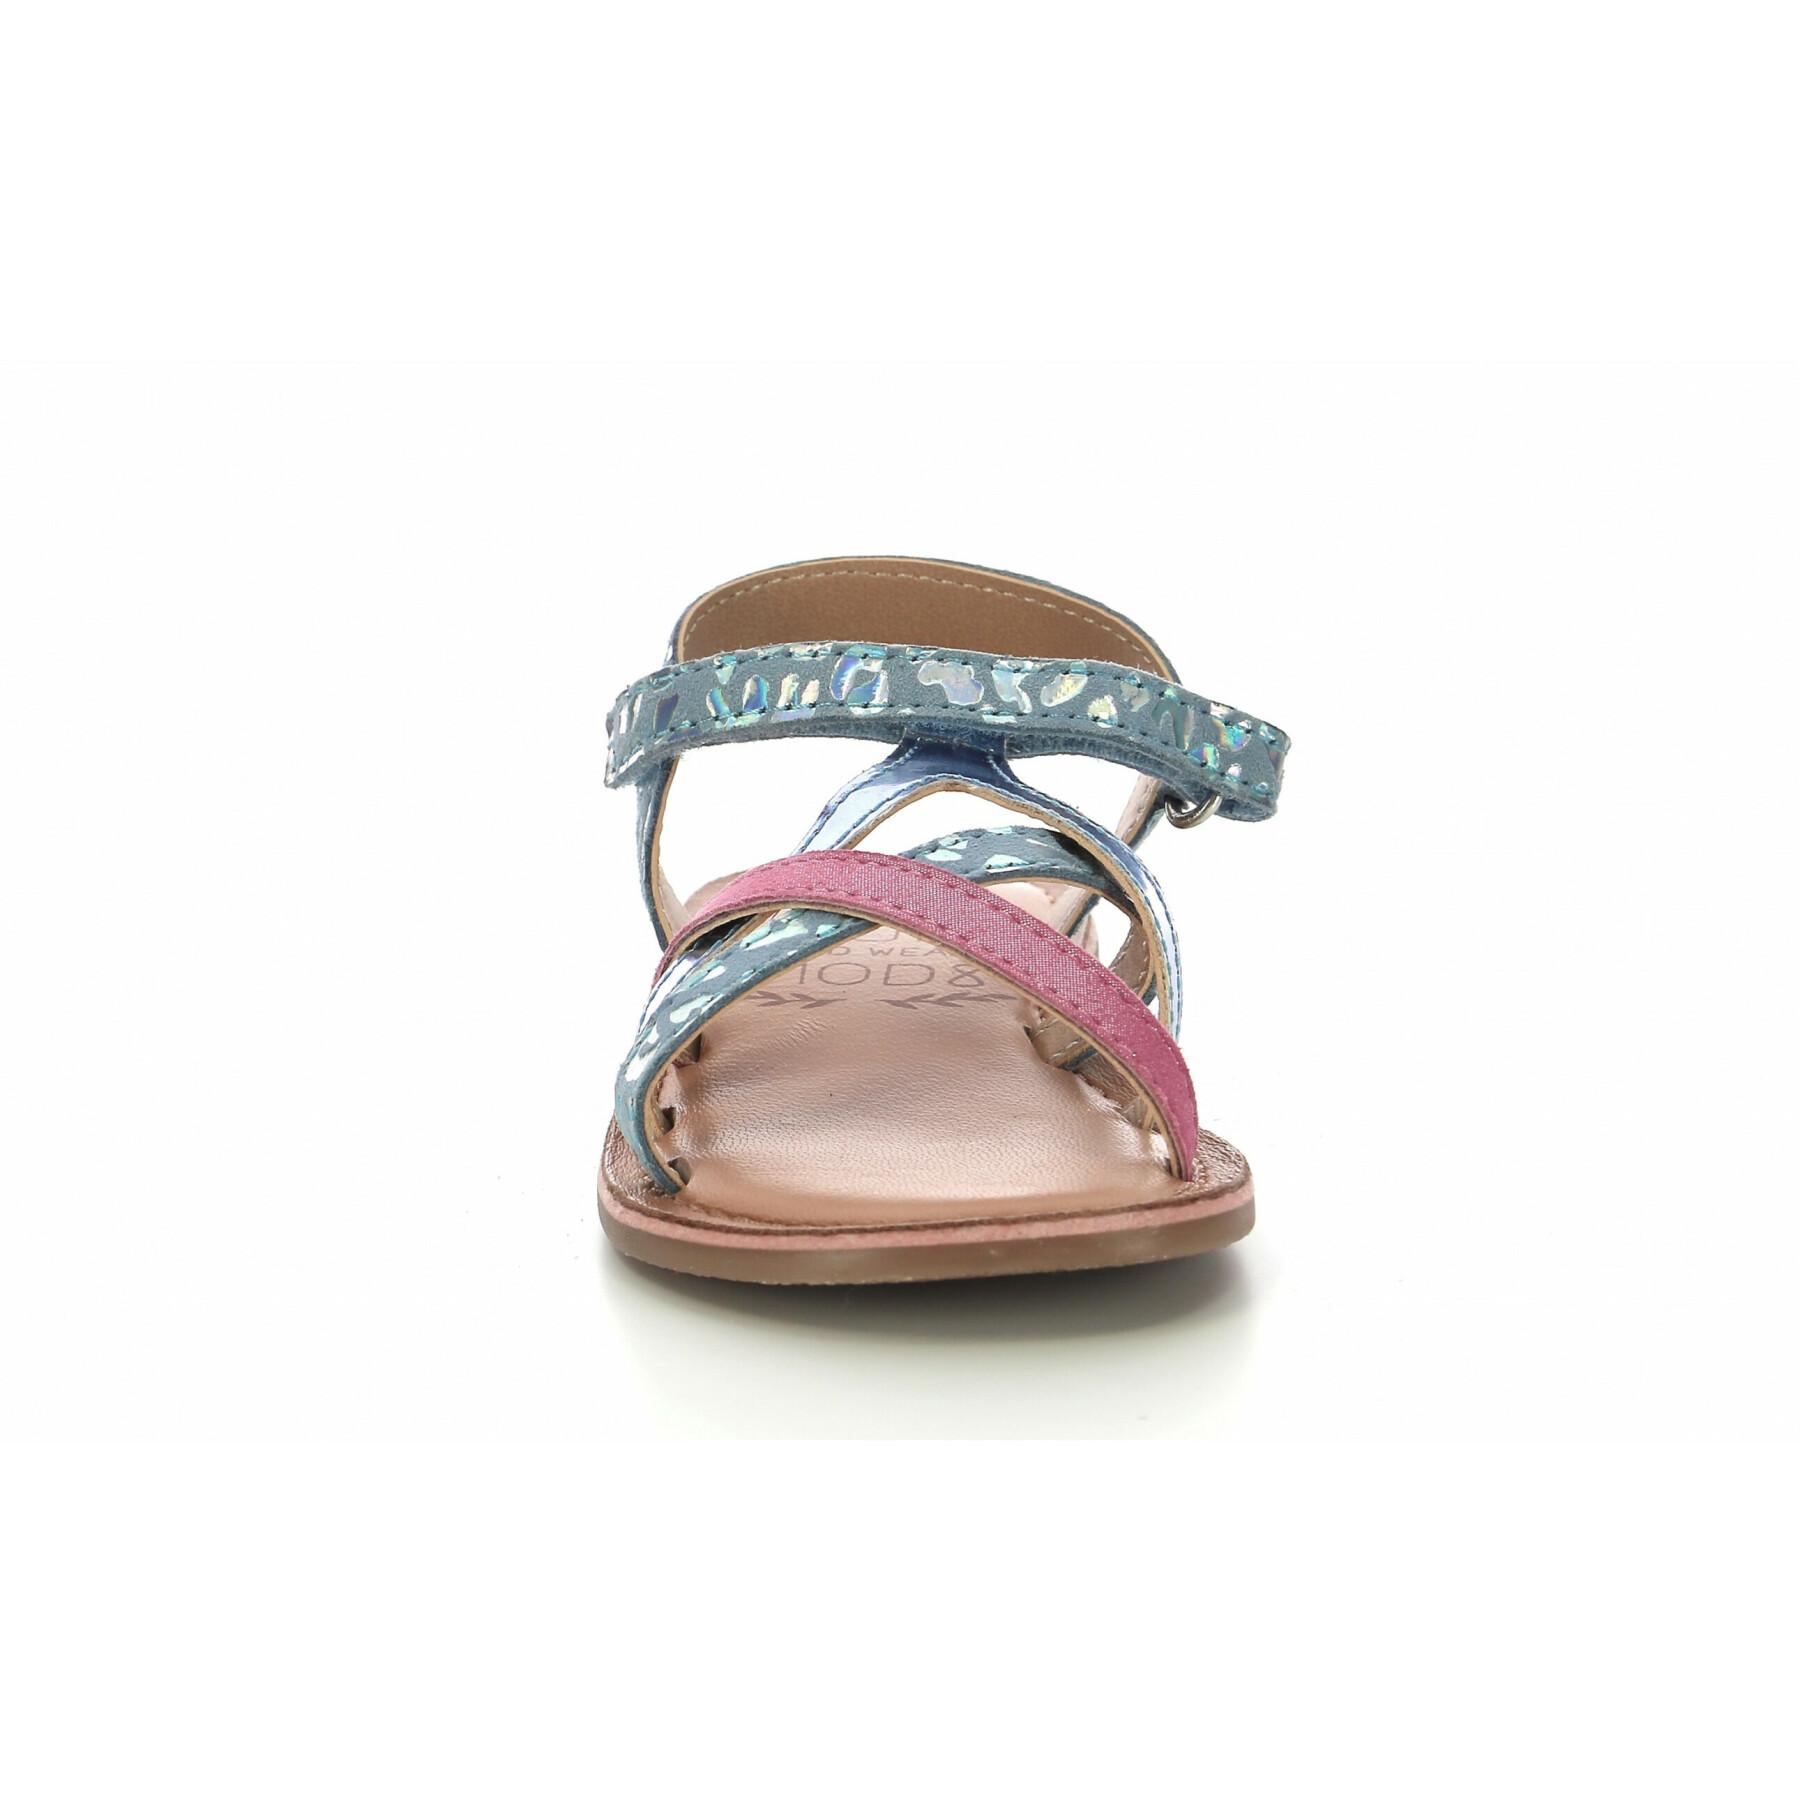 Girl's sandals MOD 8 Canissa